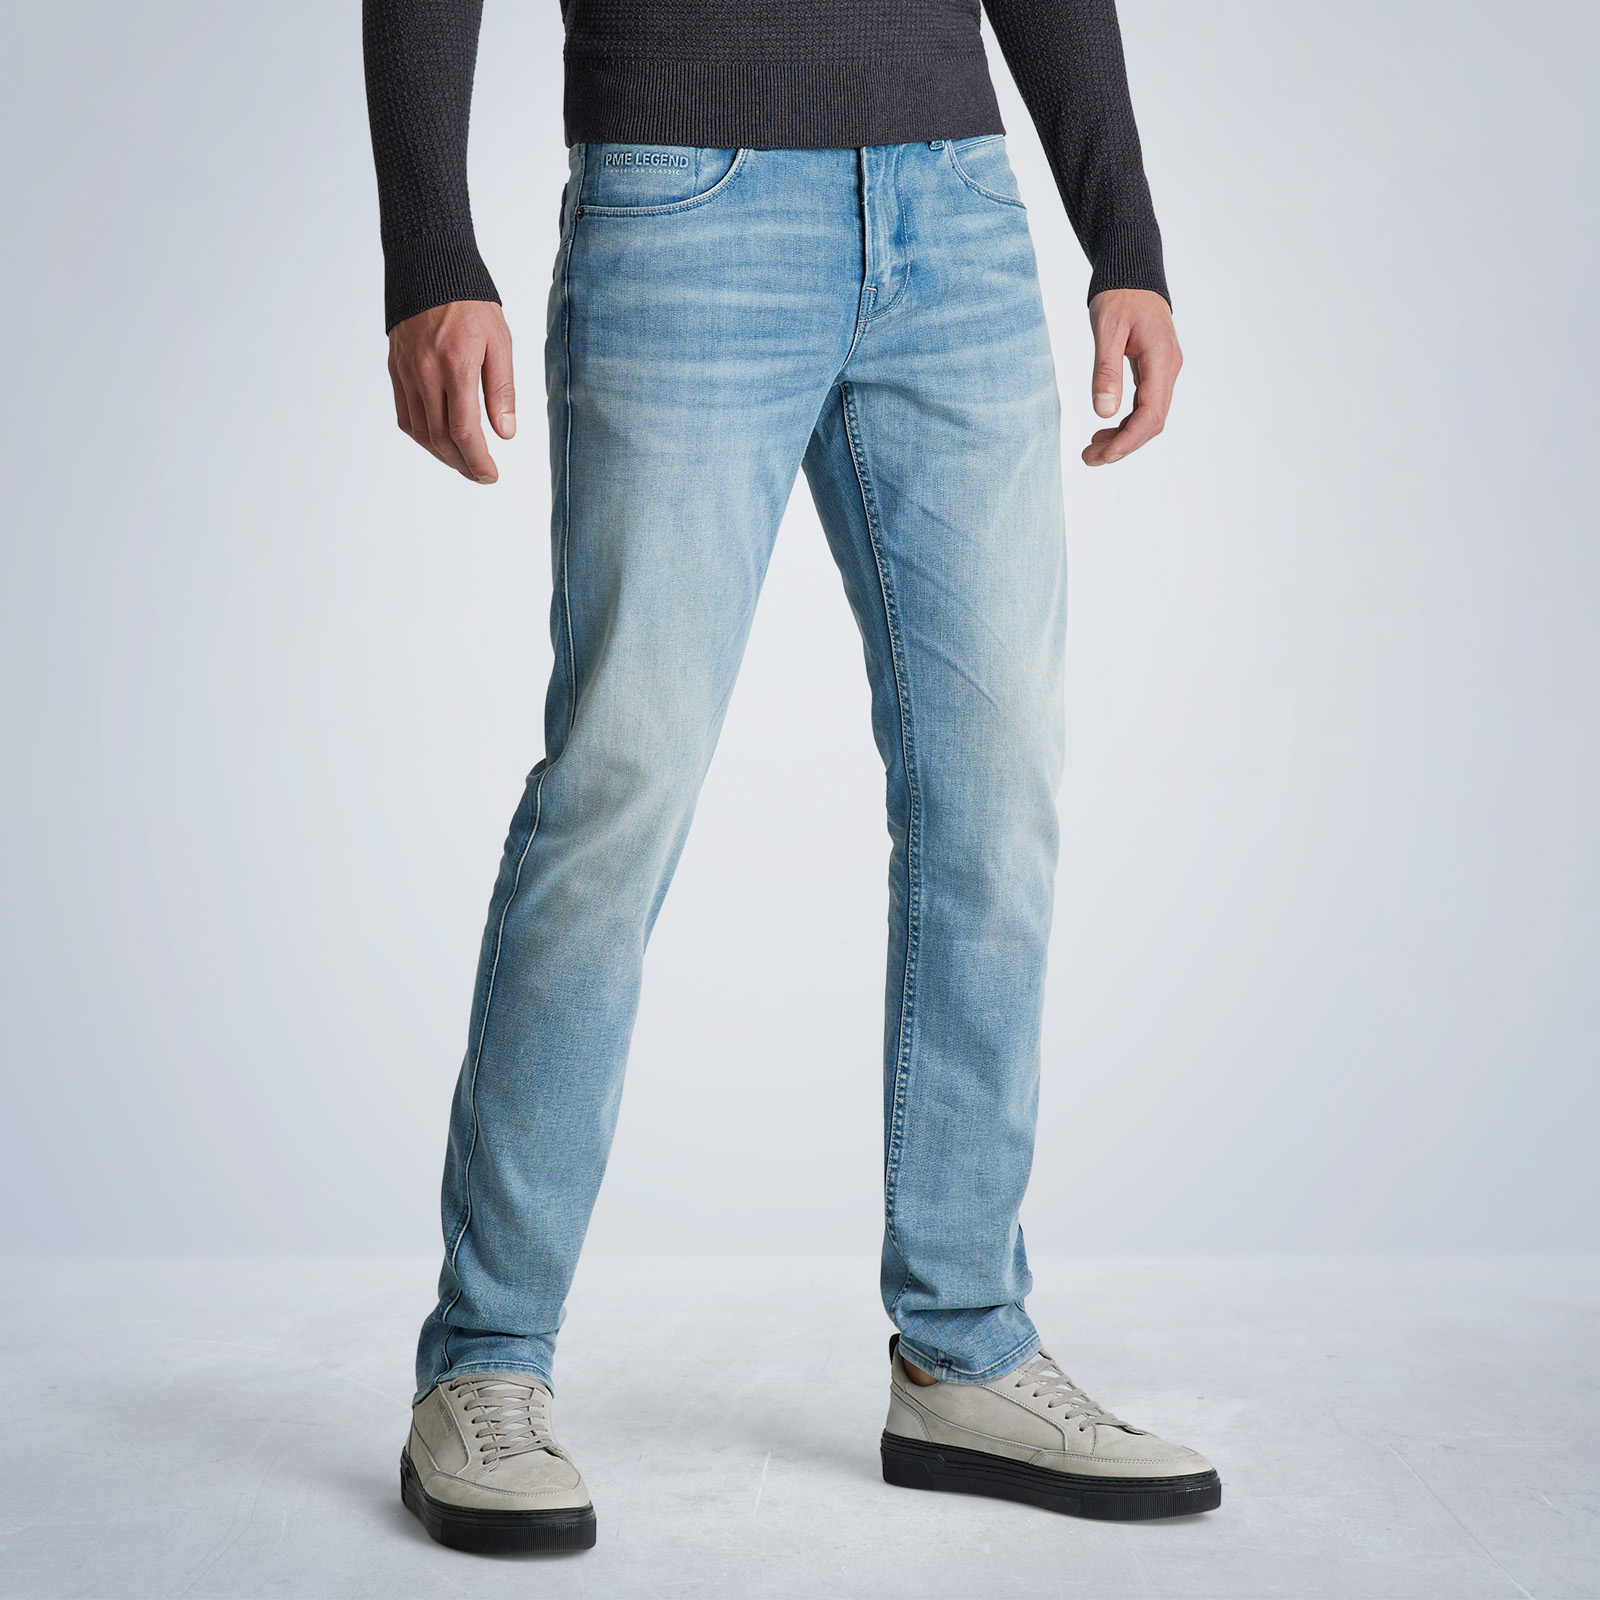 Manieren Evaluatie natuurlijk PME LEGEND | PME Legend Nightflight jeans | Free shipping and returns